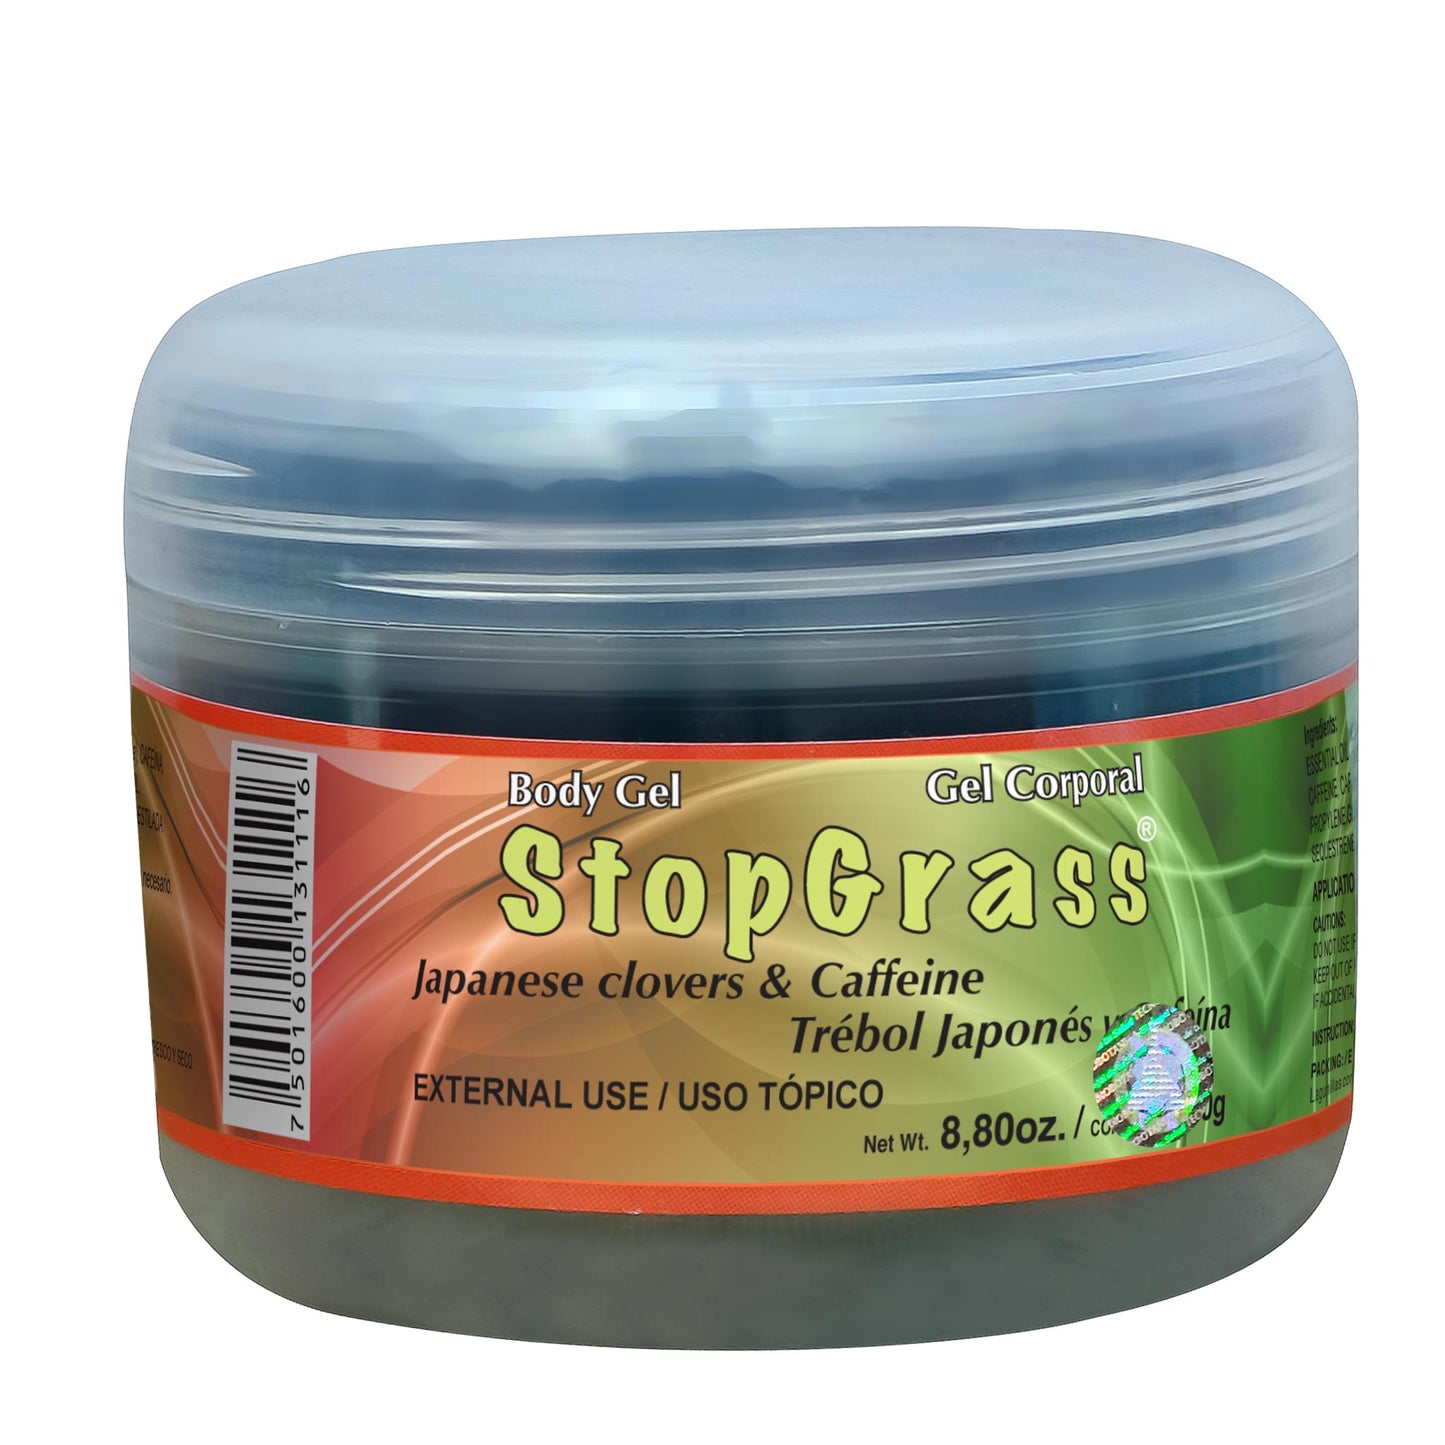 STOPGRASS ® gel corporal 250g